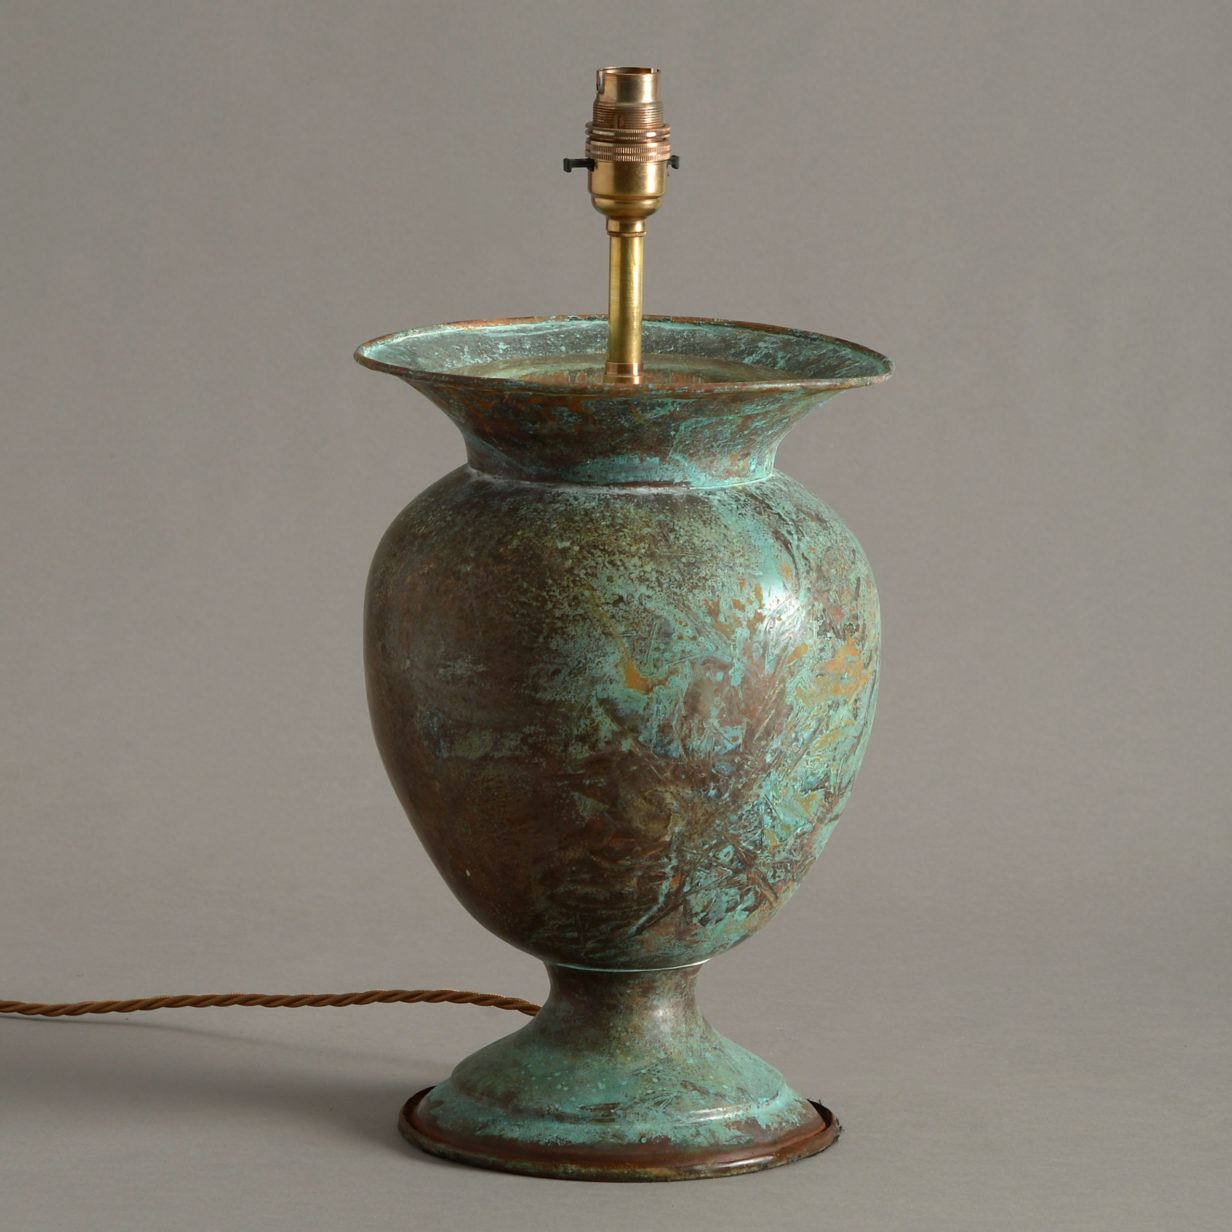 A copper vase lamp base